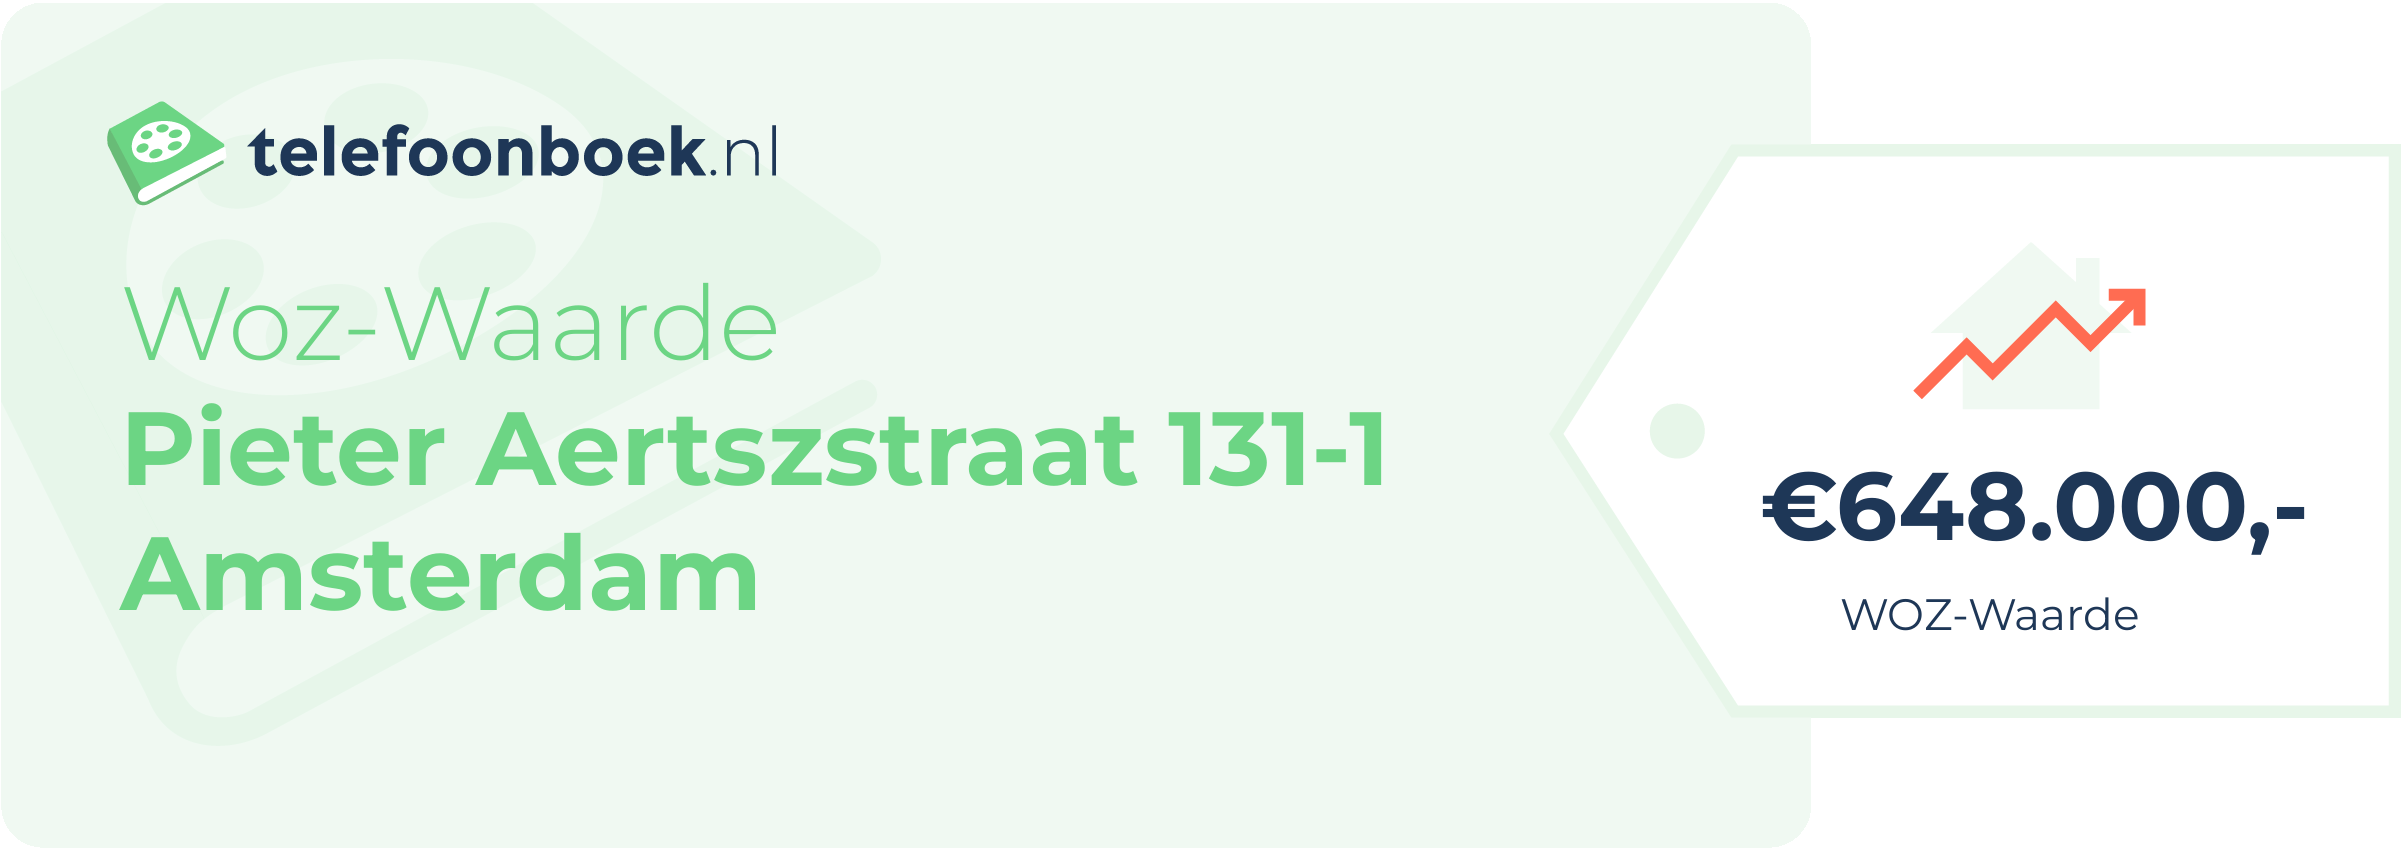 WOZ-waarde Pieter Aertszstraat 131-1 Amsterdam